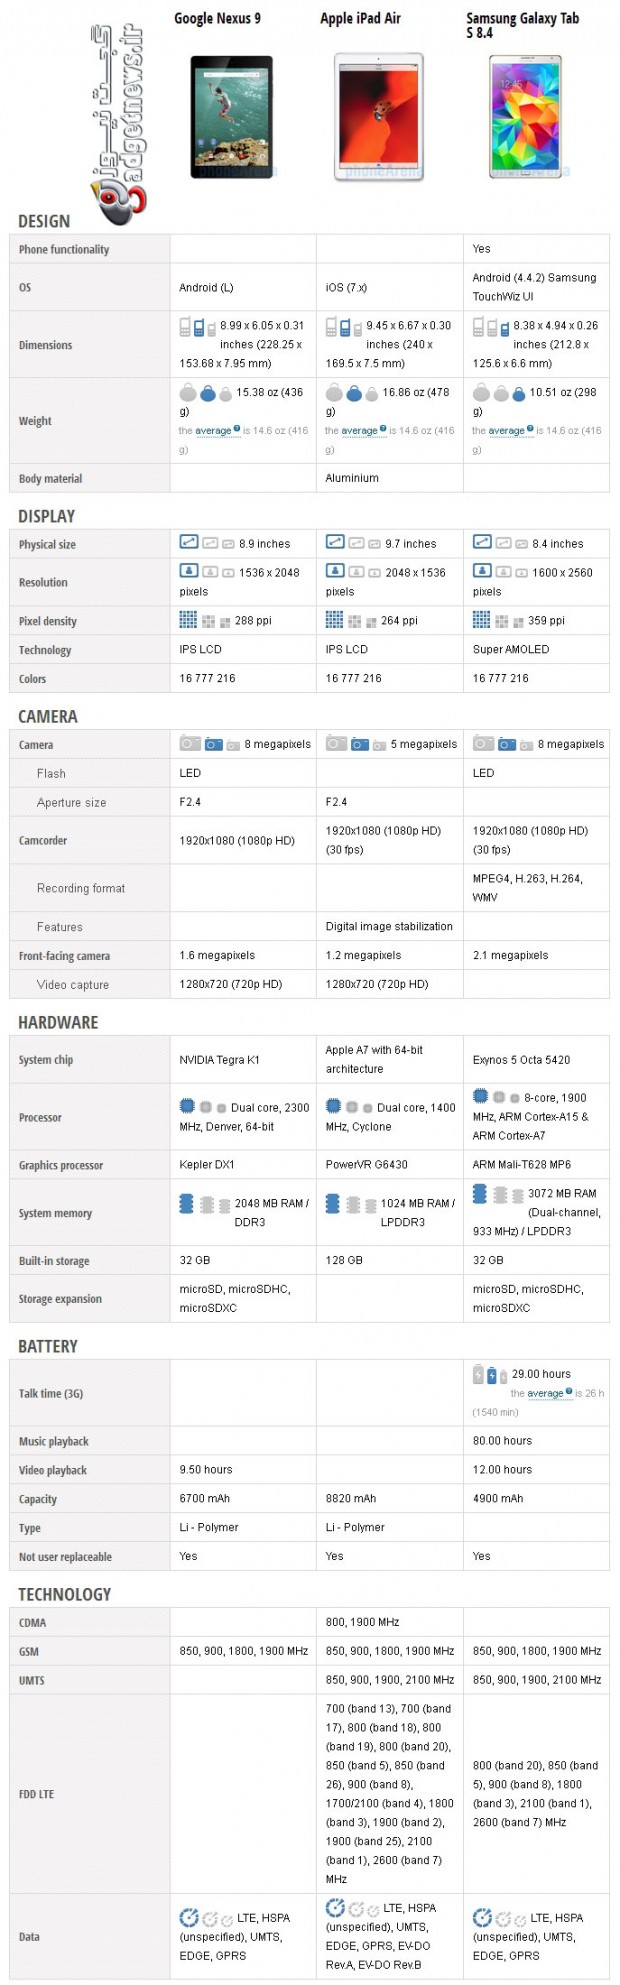 Google-Nexus-9-vs-iPad-Air-vs-Samsung-Galaxy-Tab-S-8.4-1